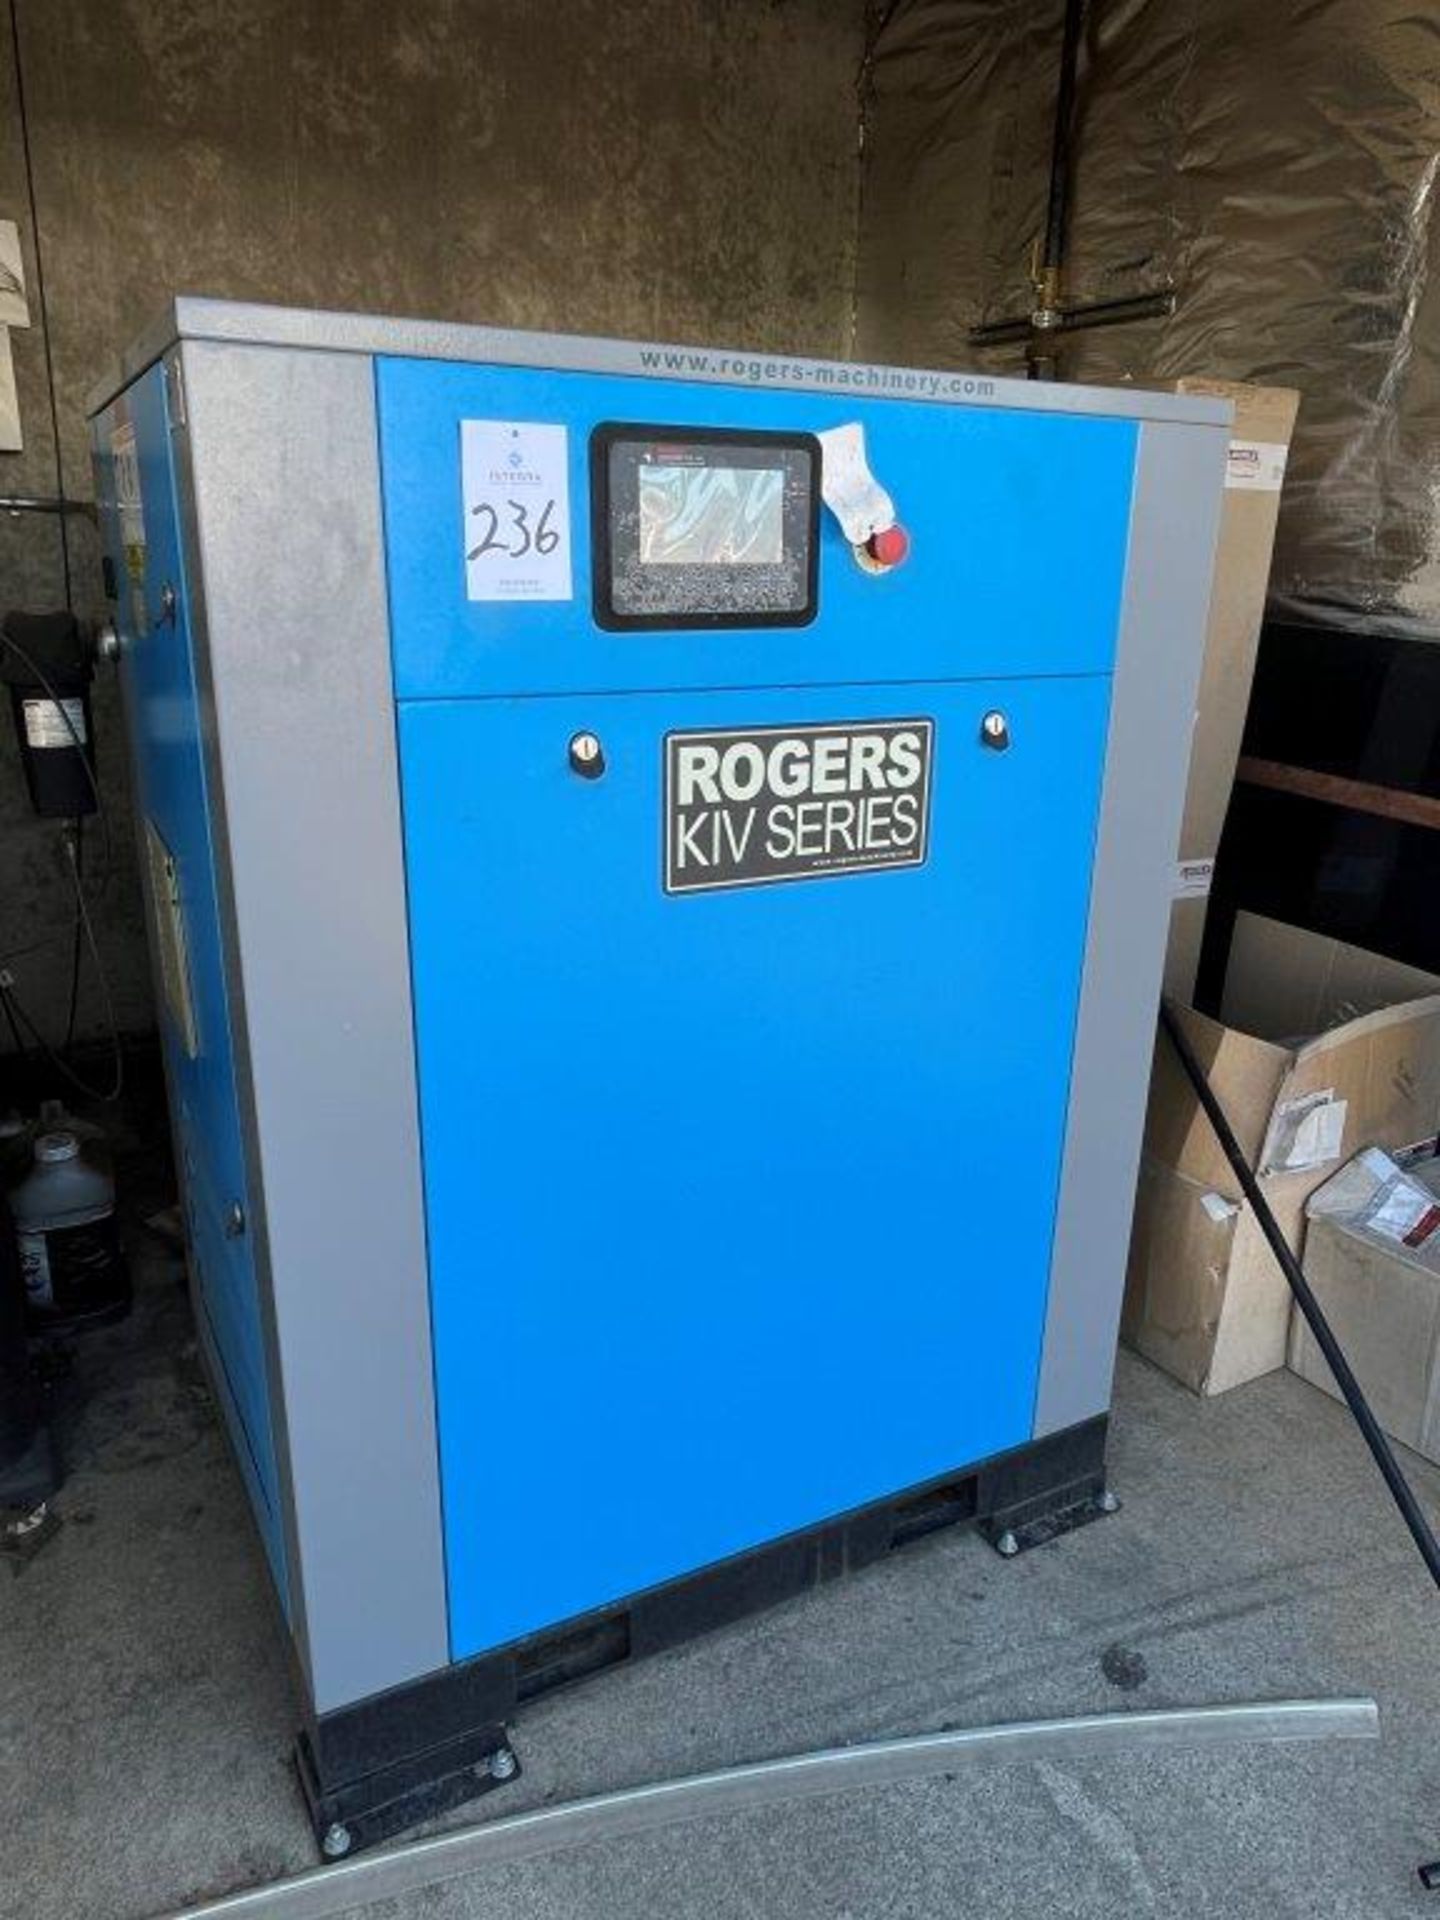 Rogers KIV Series RMC-KIV-25-100 Refrigerated Air Dryer